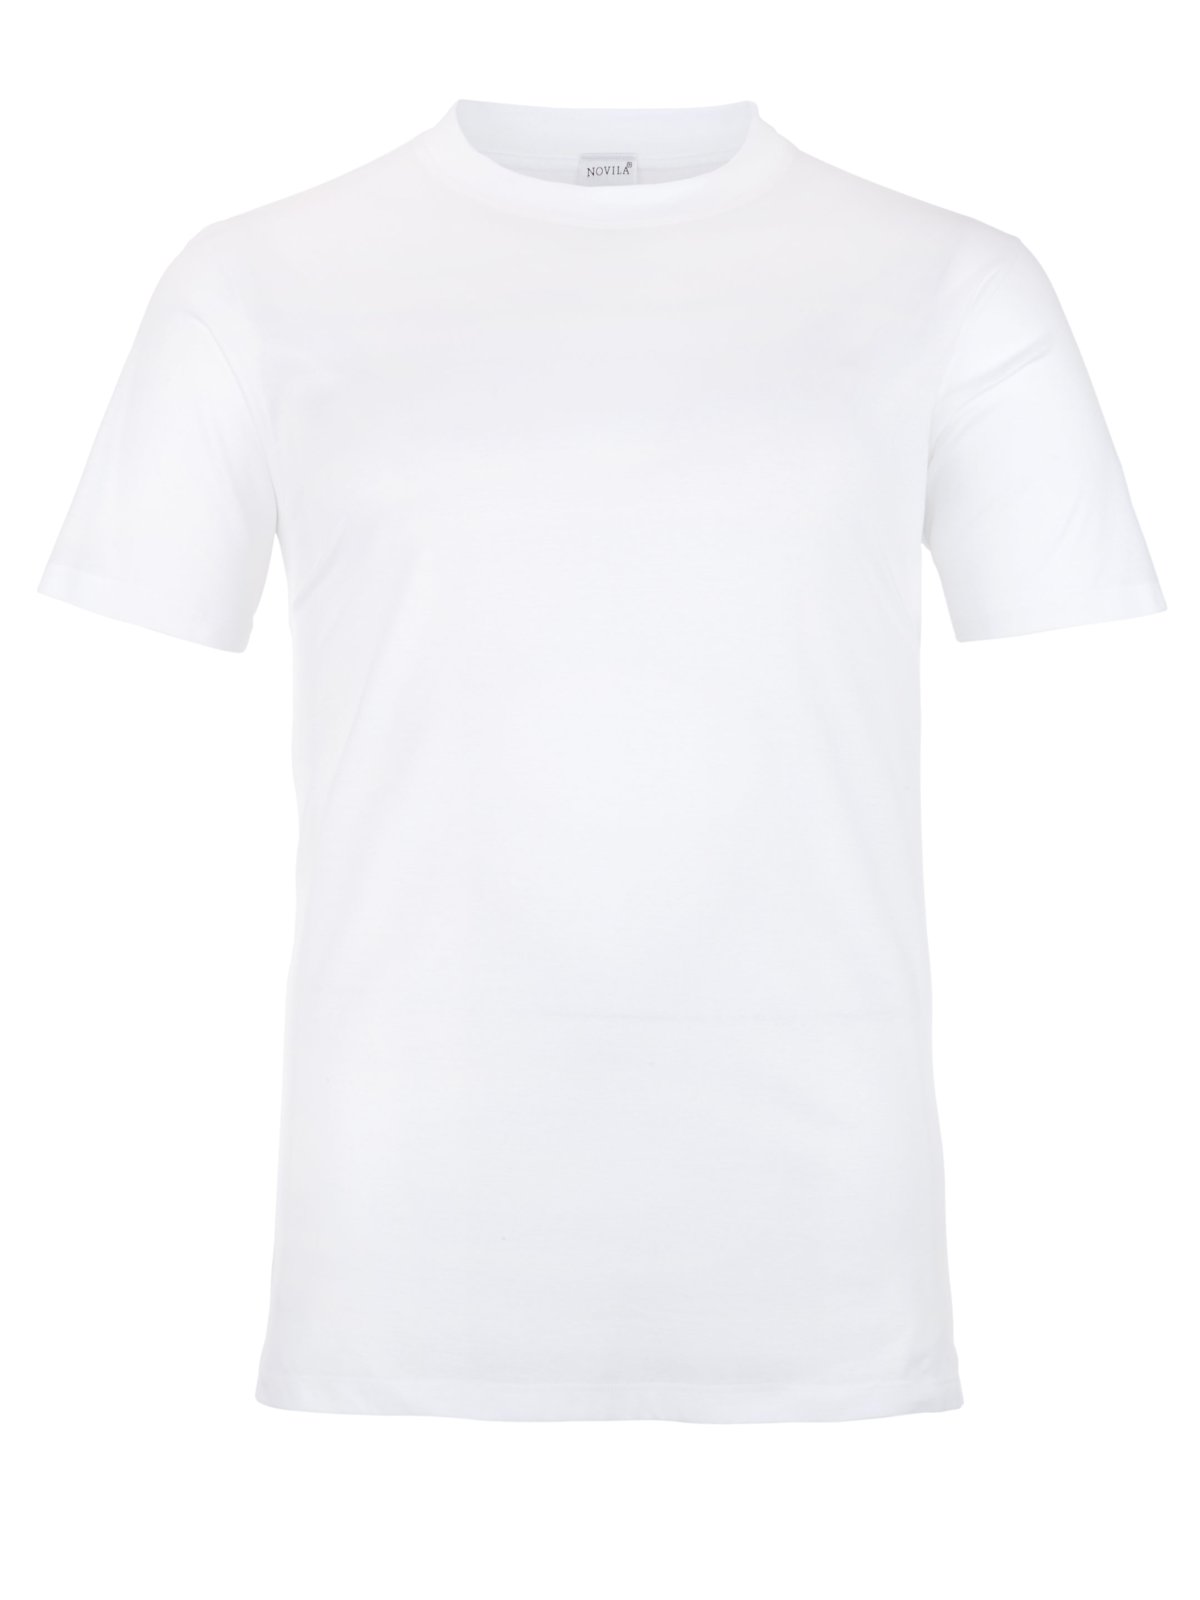 Novila T-Shirt mit Turtle-Neck, Unterhemd